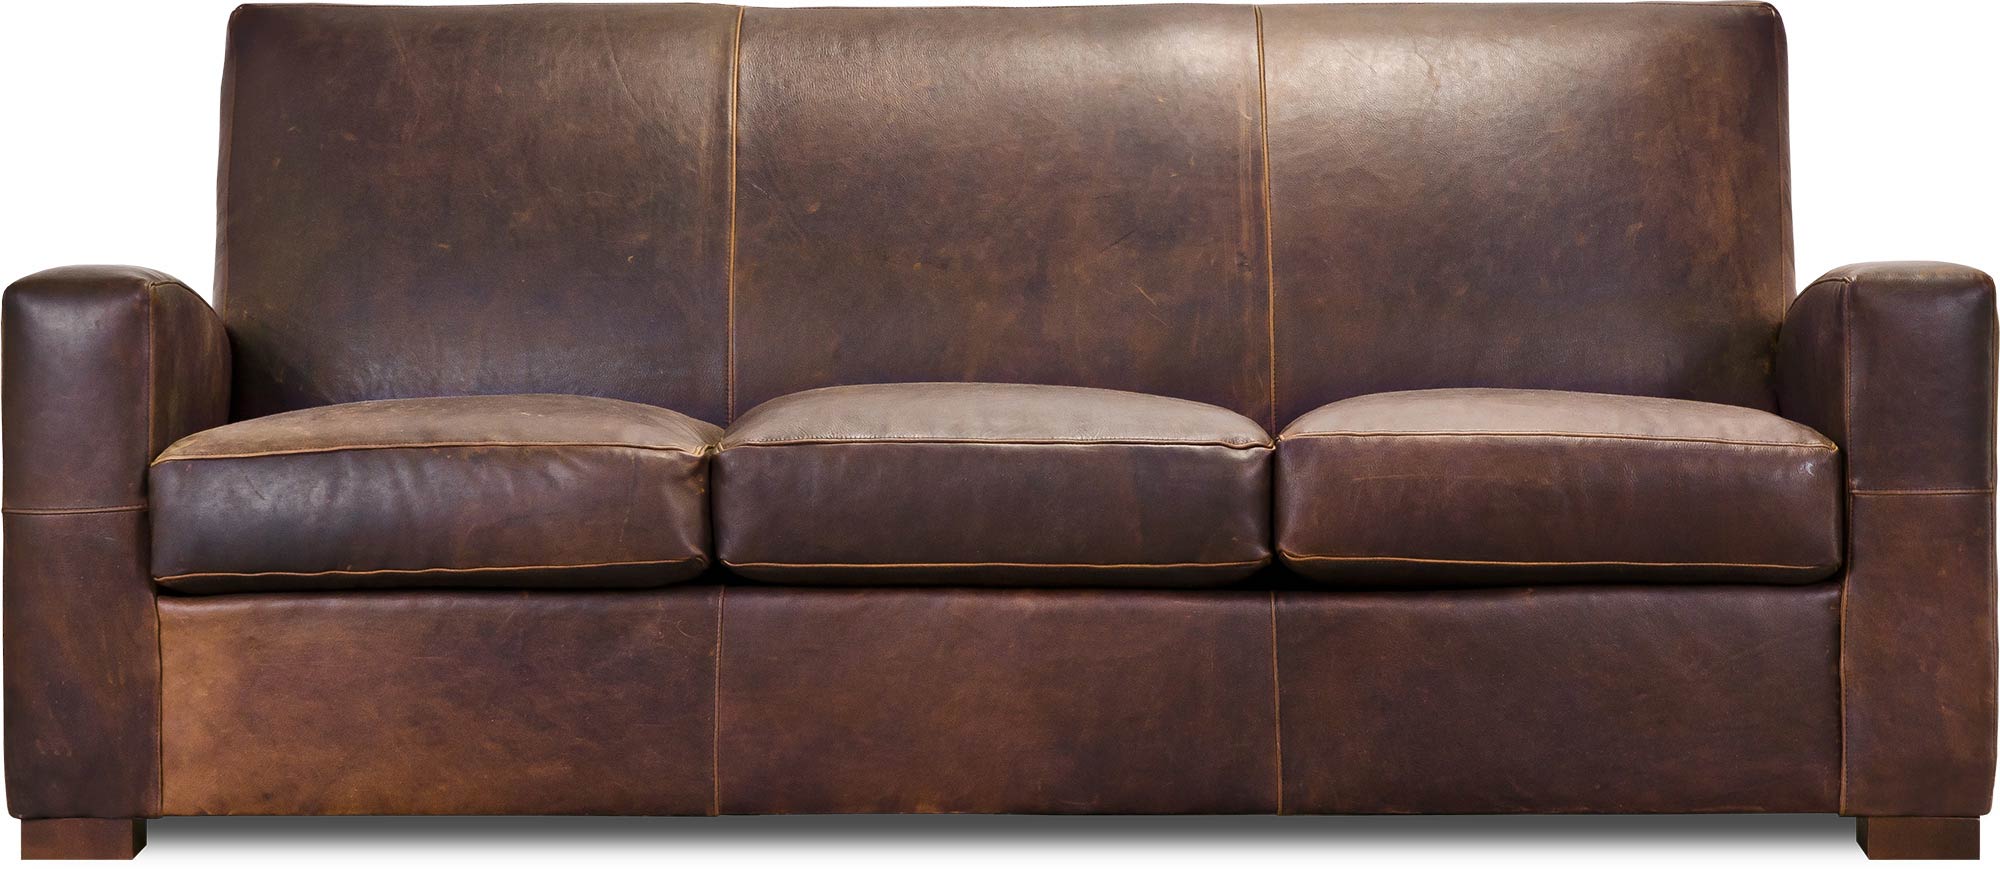 Prescott sofa in Berkshire leather